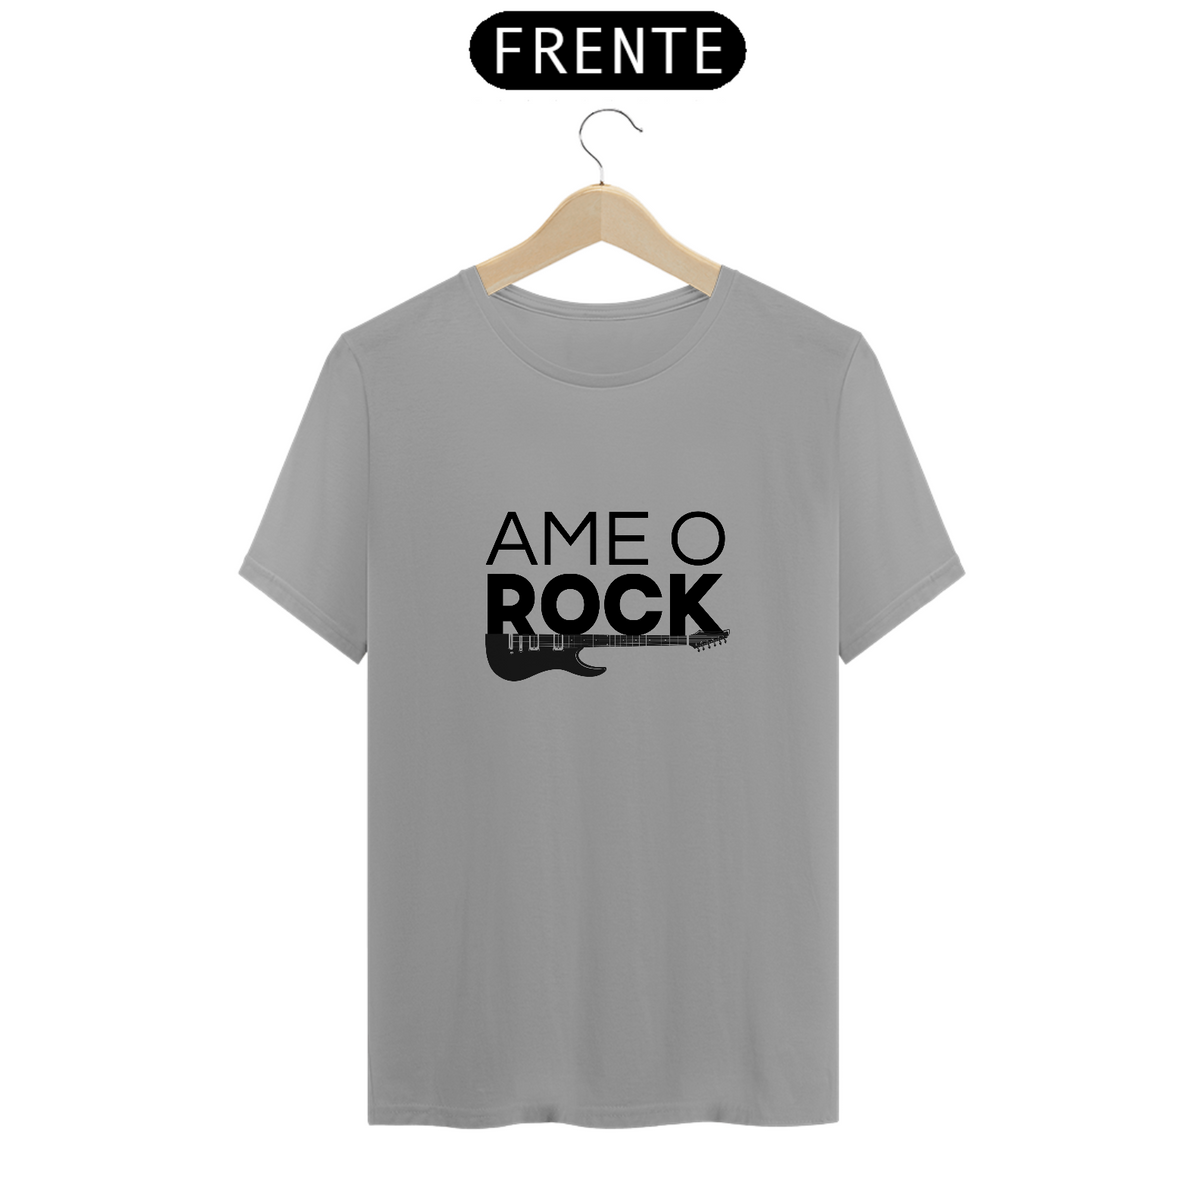 Nome do produto: Camiseta Ame o Rock